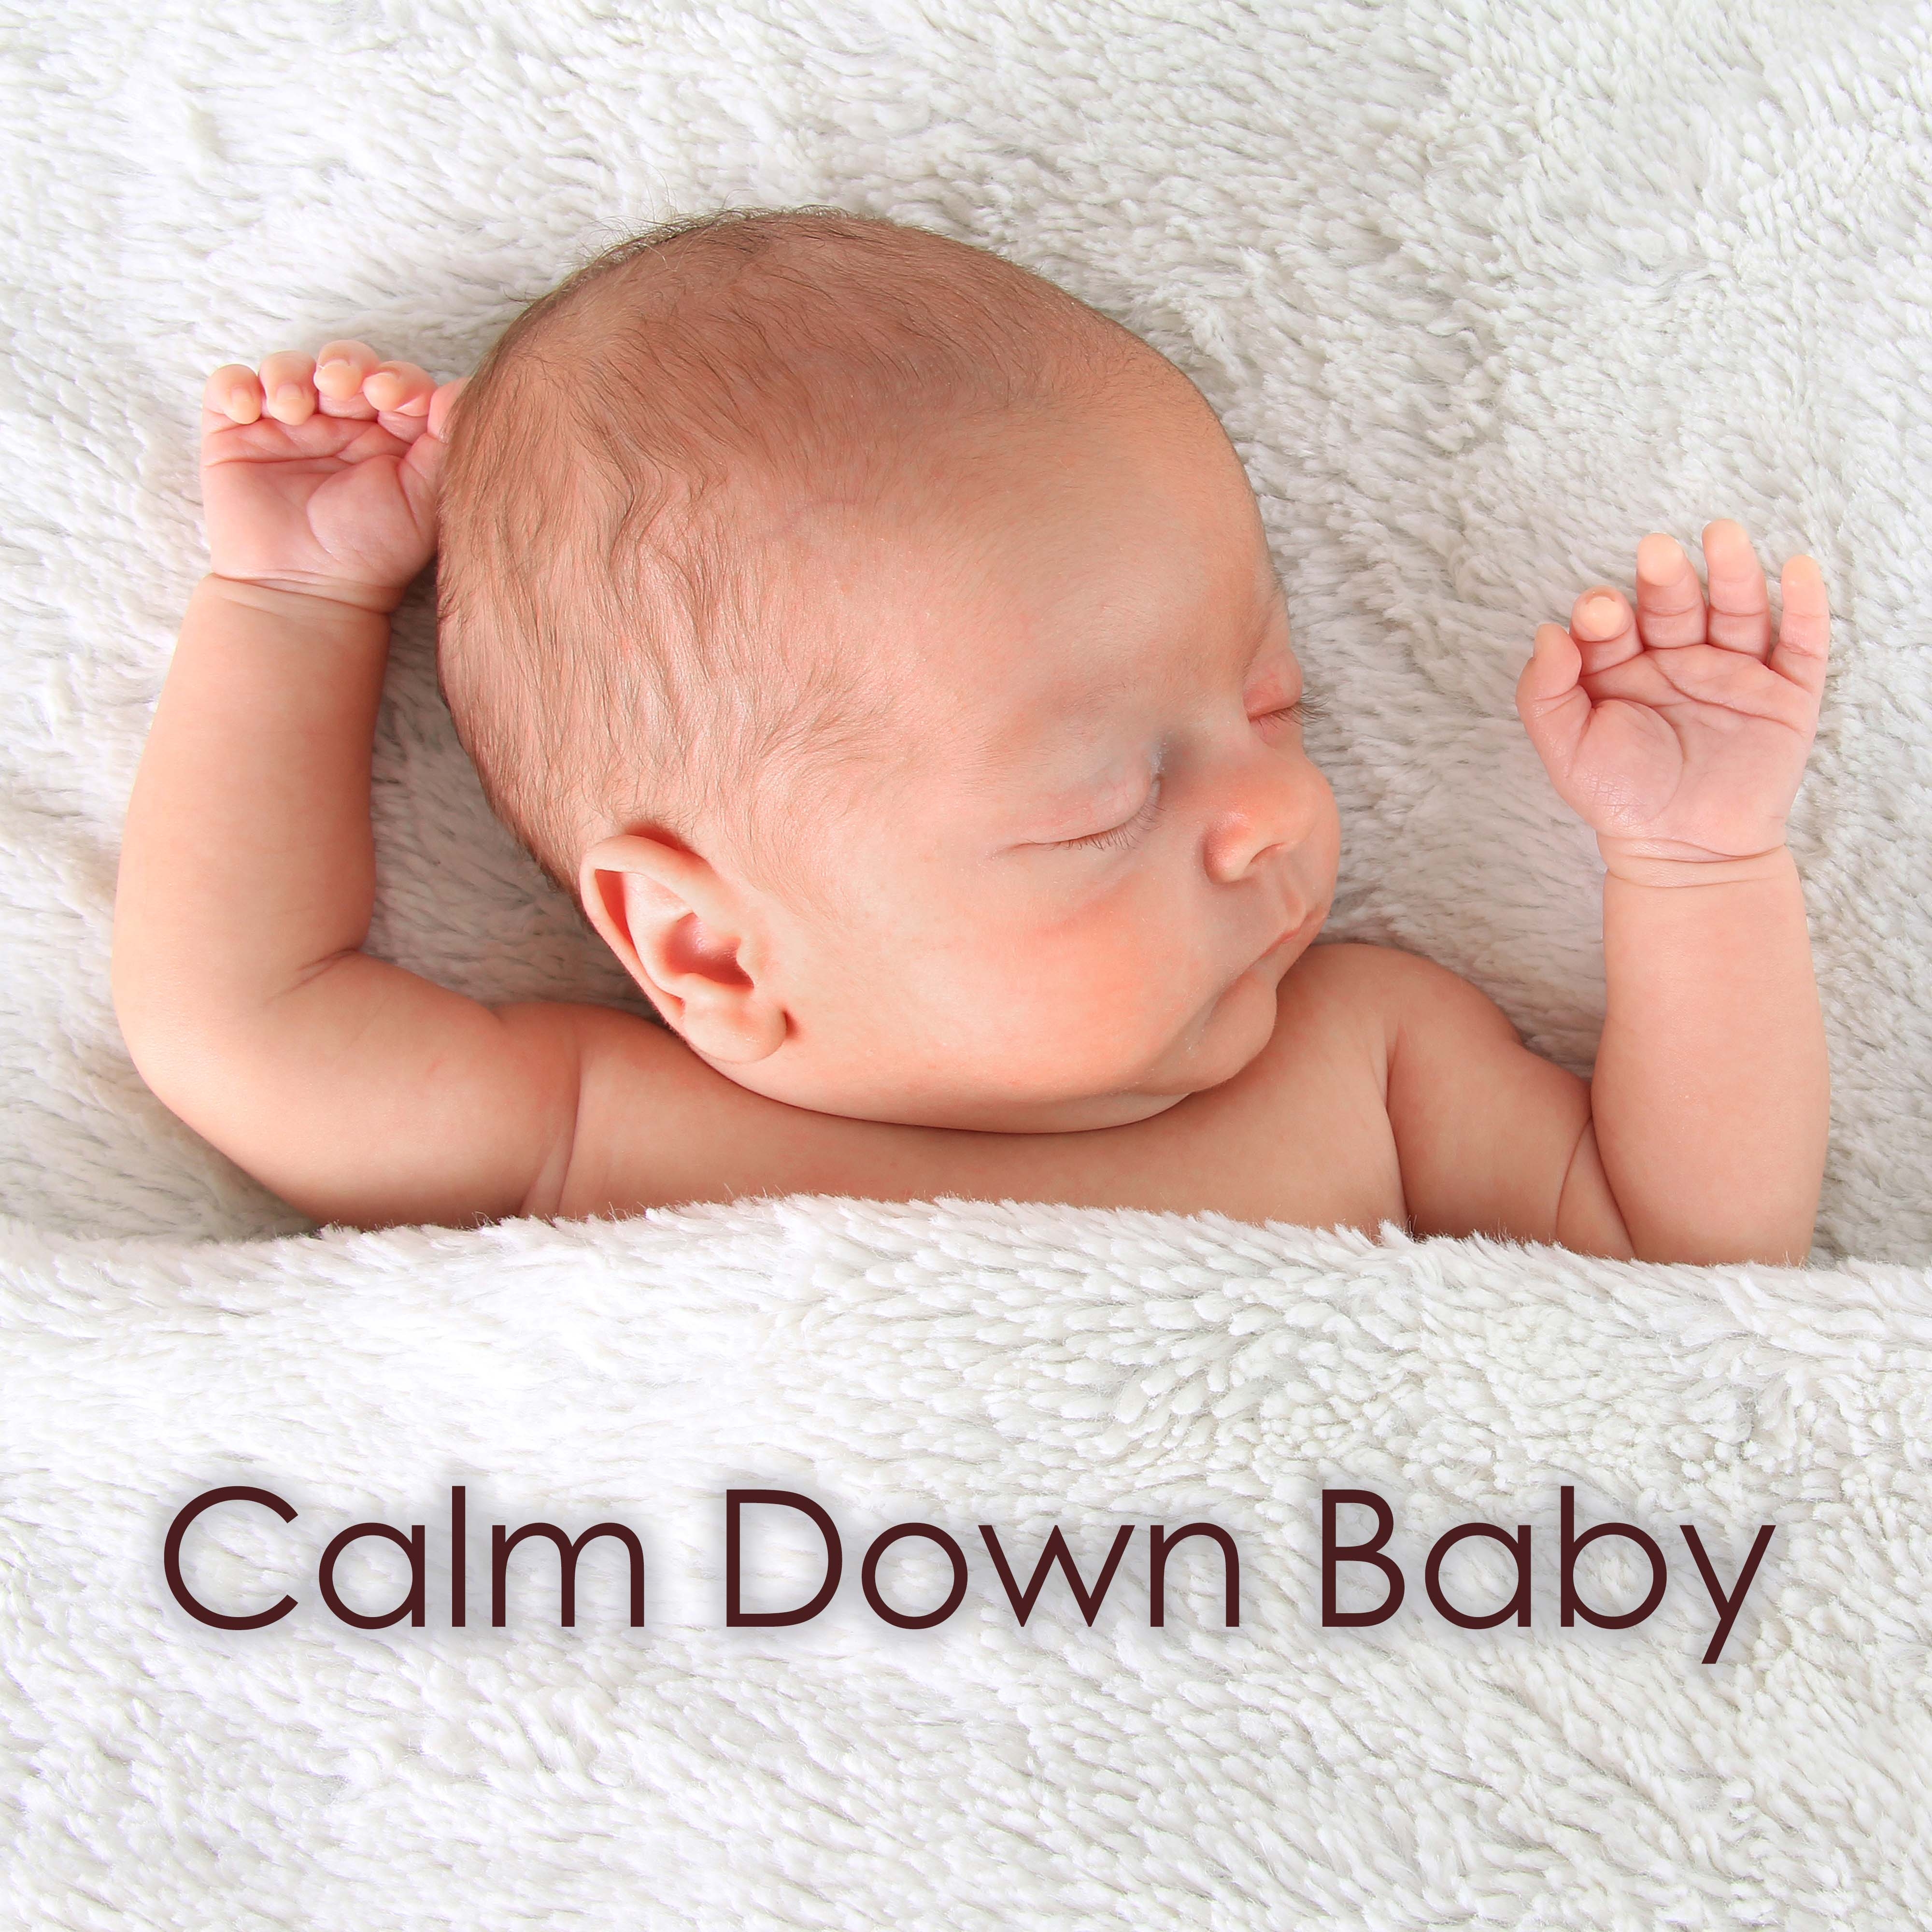 Calm Down Baby - Babies Calming Music